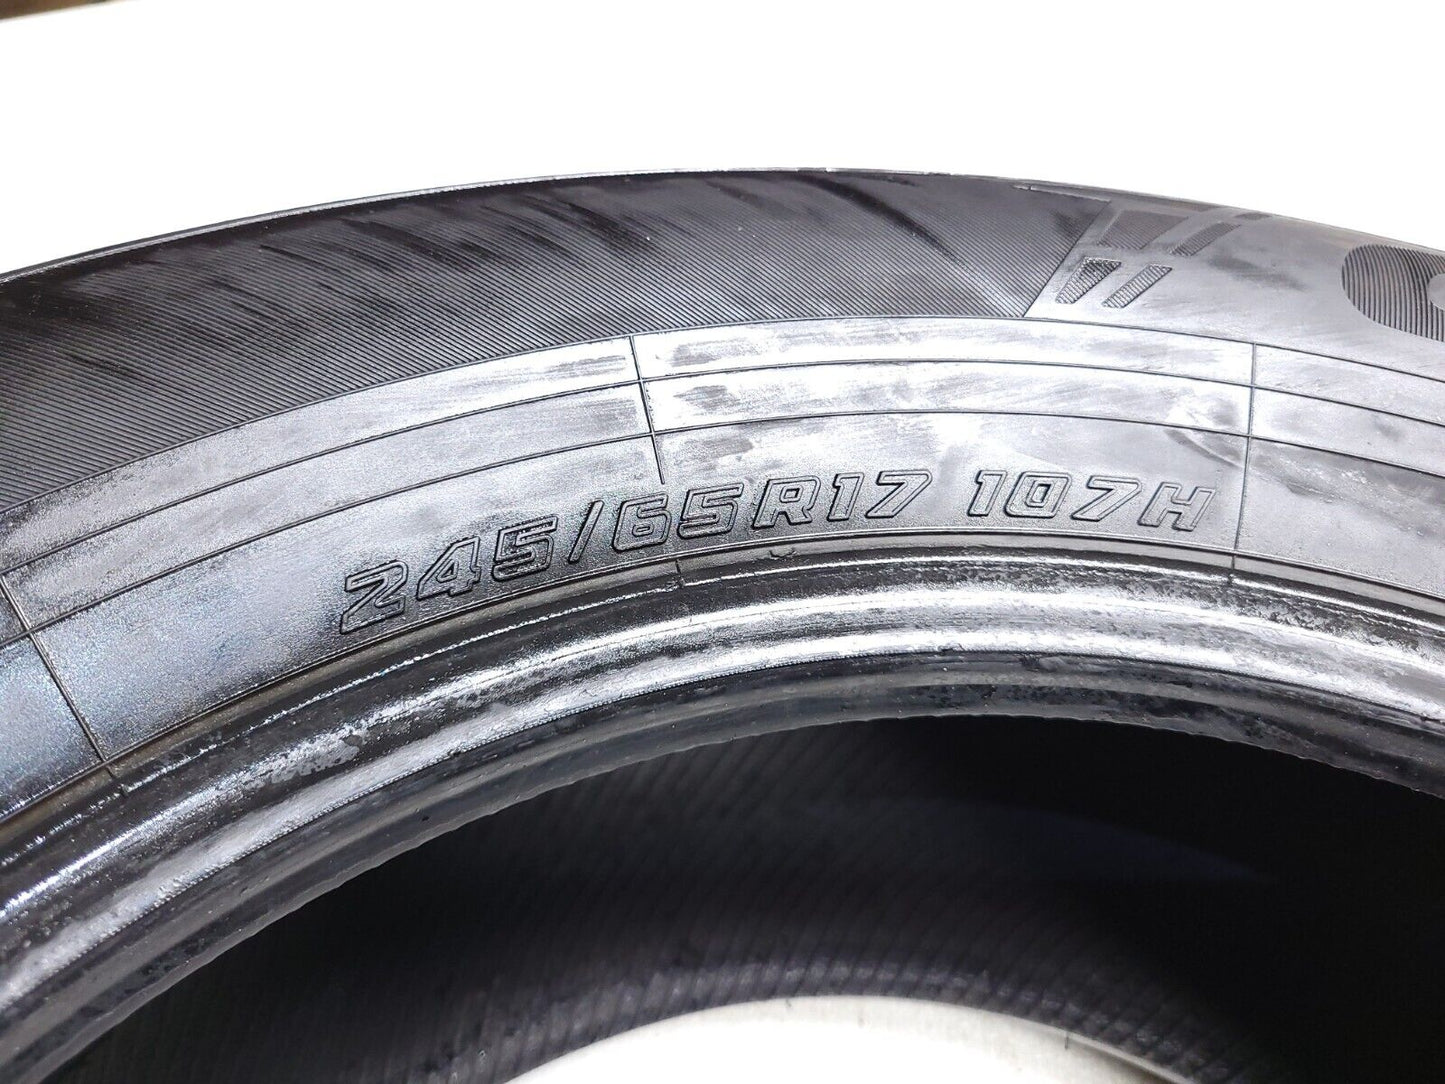 Yokohama Geolandar Cv 245/65r17 107h Tread 9.3/32" Used Tire